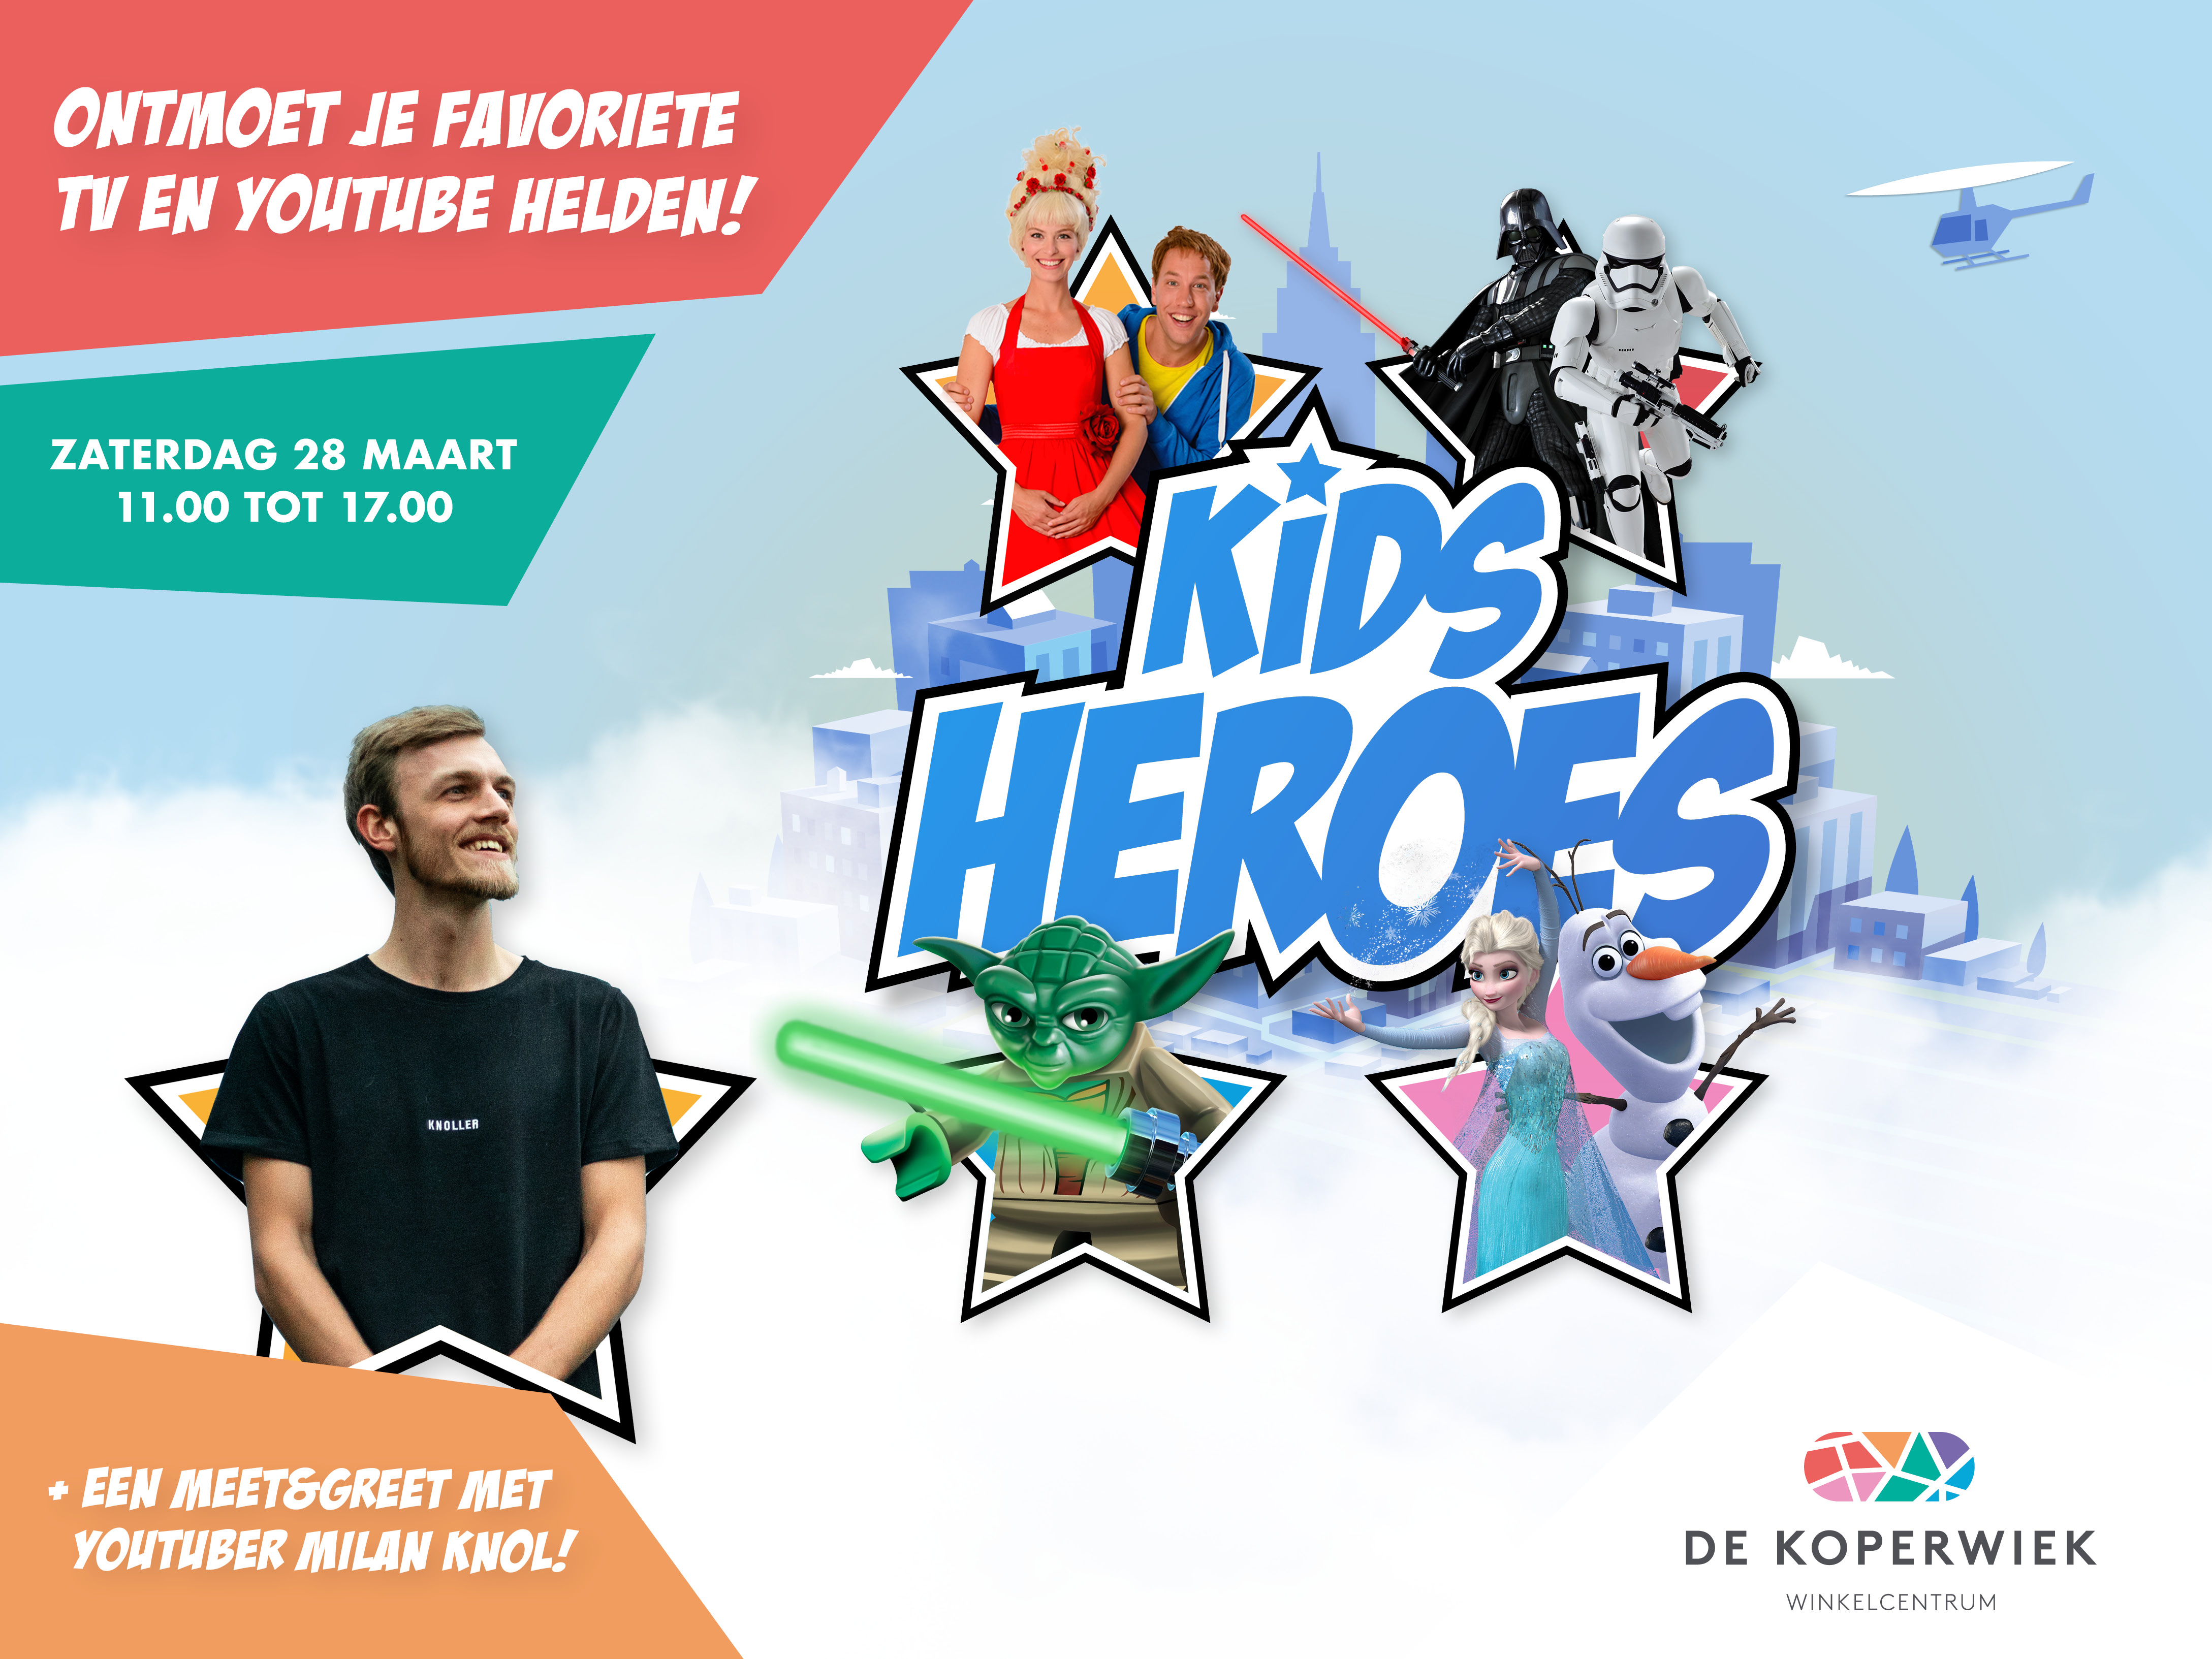 Event: Kids Heroes